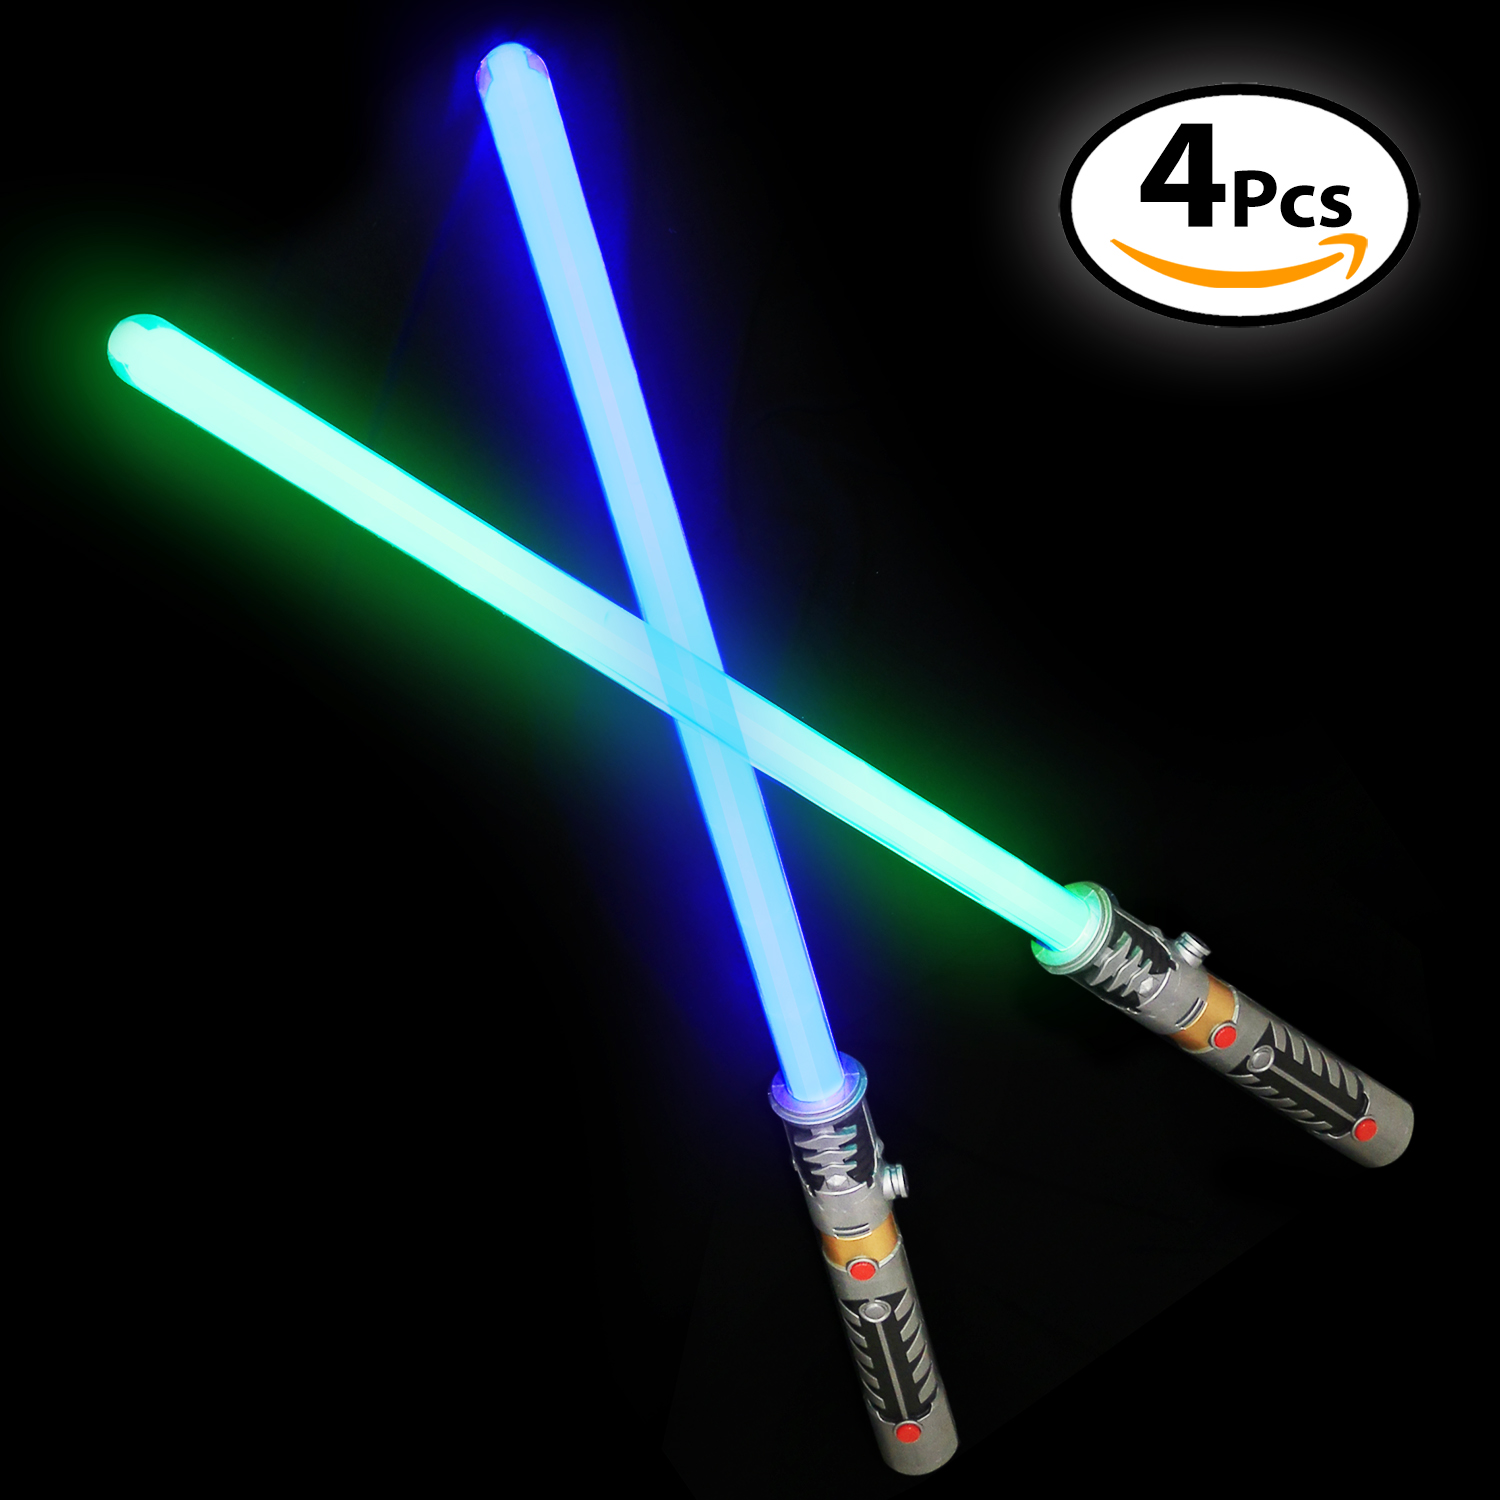 star wars laser sword toy